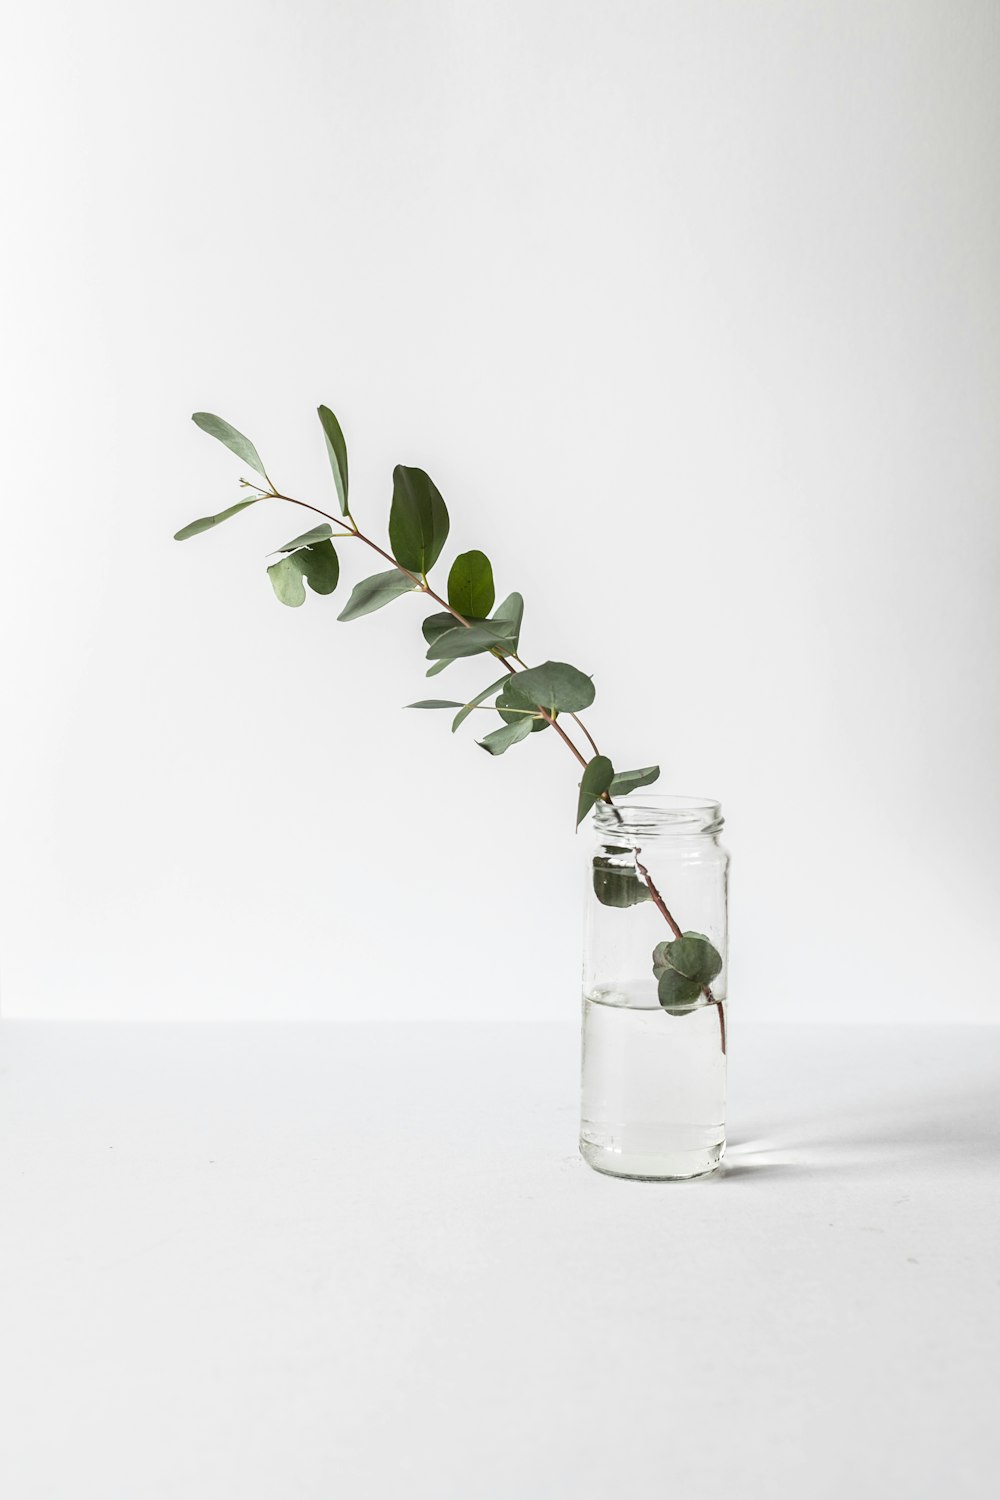 green leafed plant in glass jar